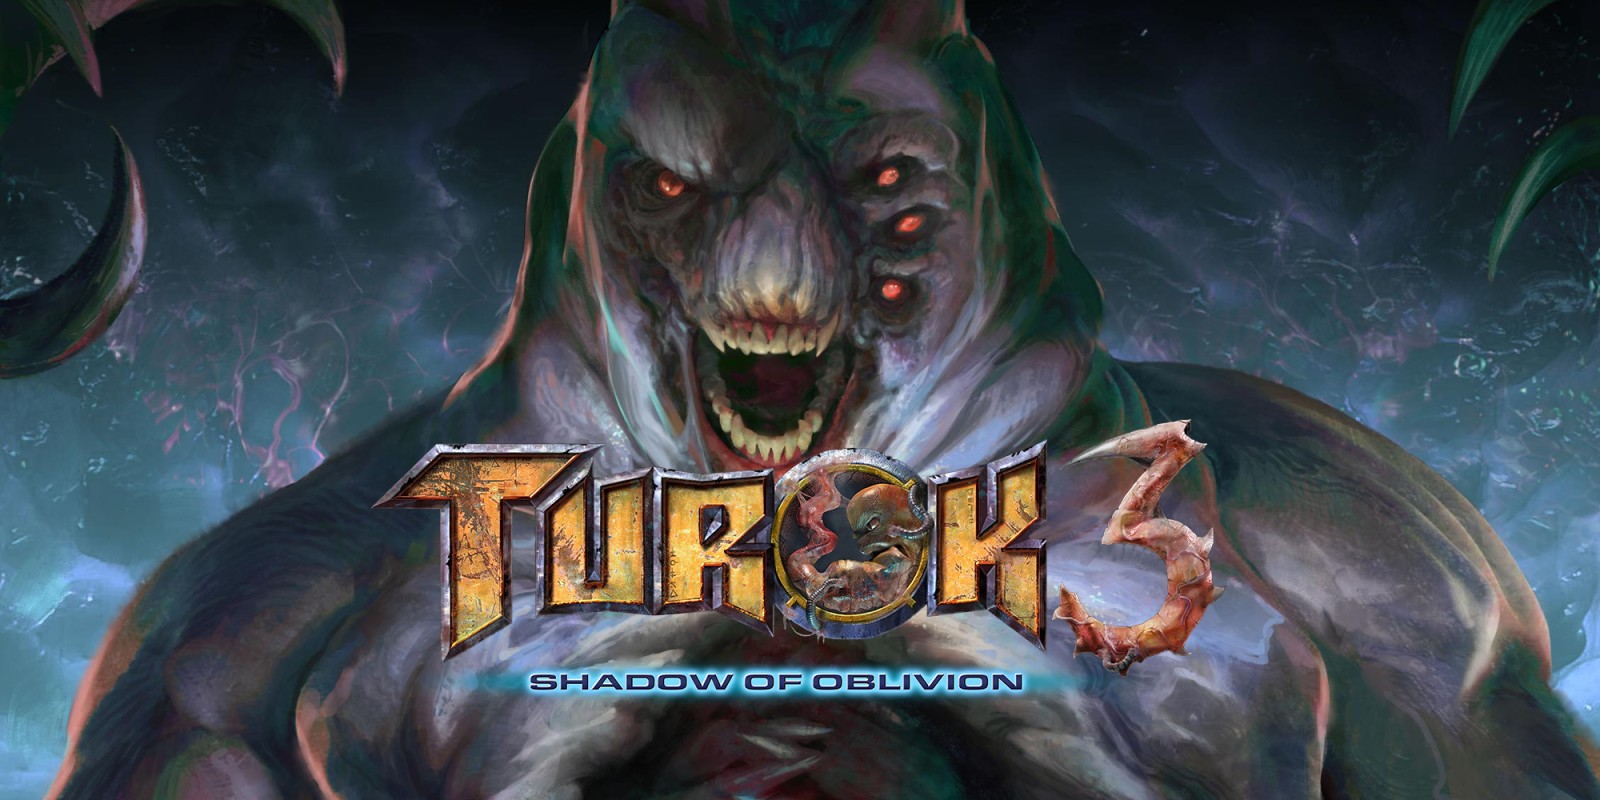 Trailer giới thiệu Turok 3: Shadow of Oblivion Remastered